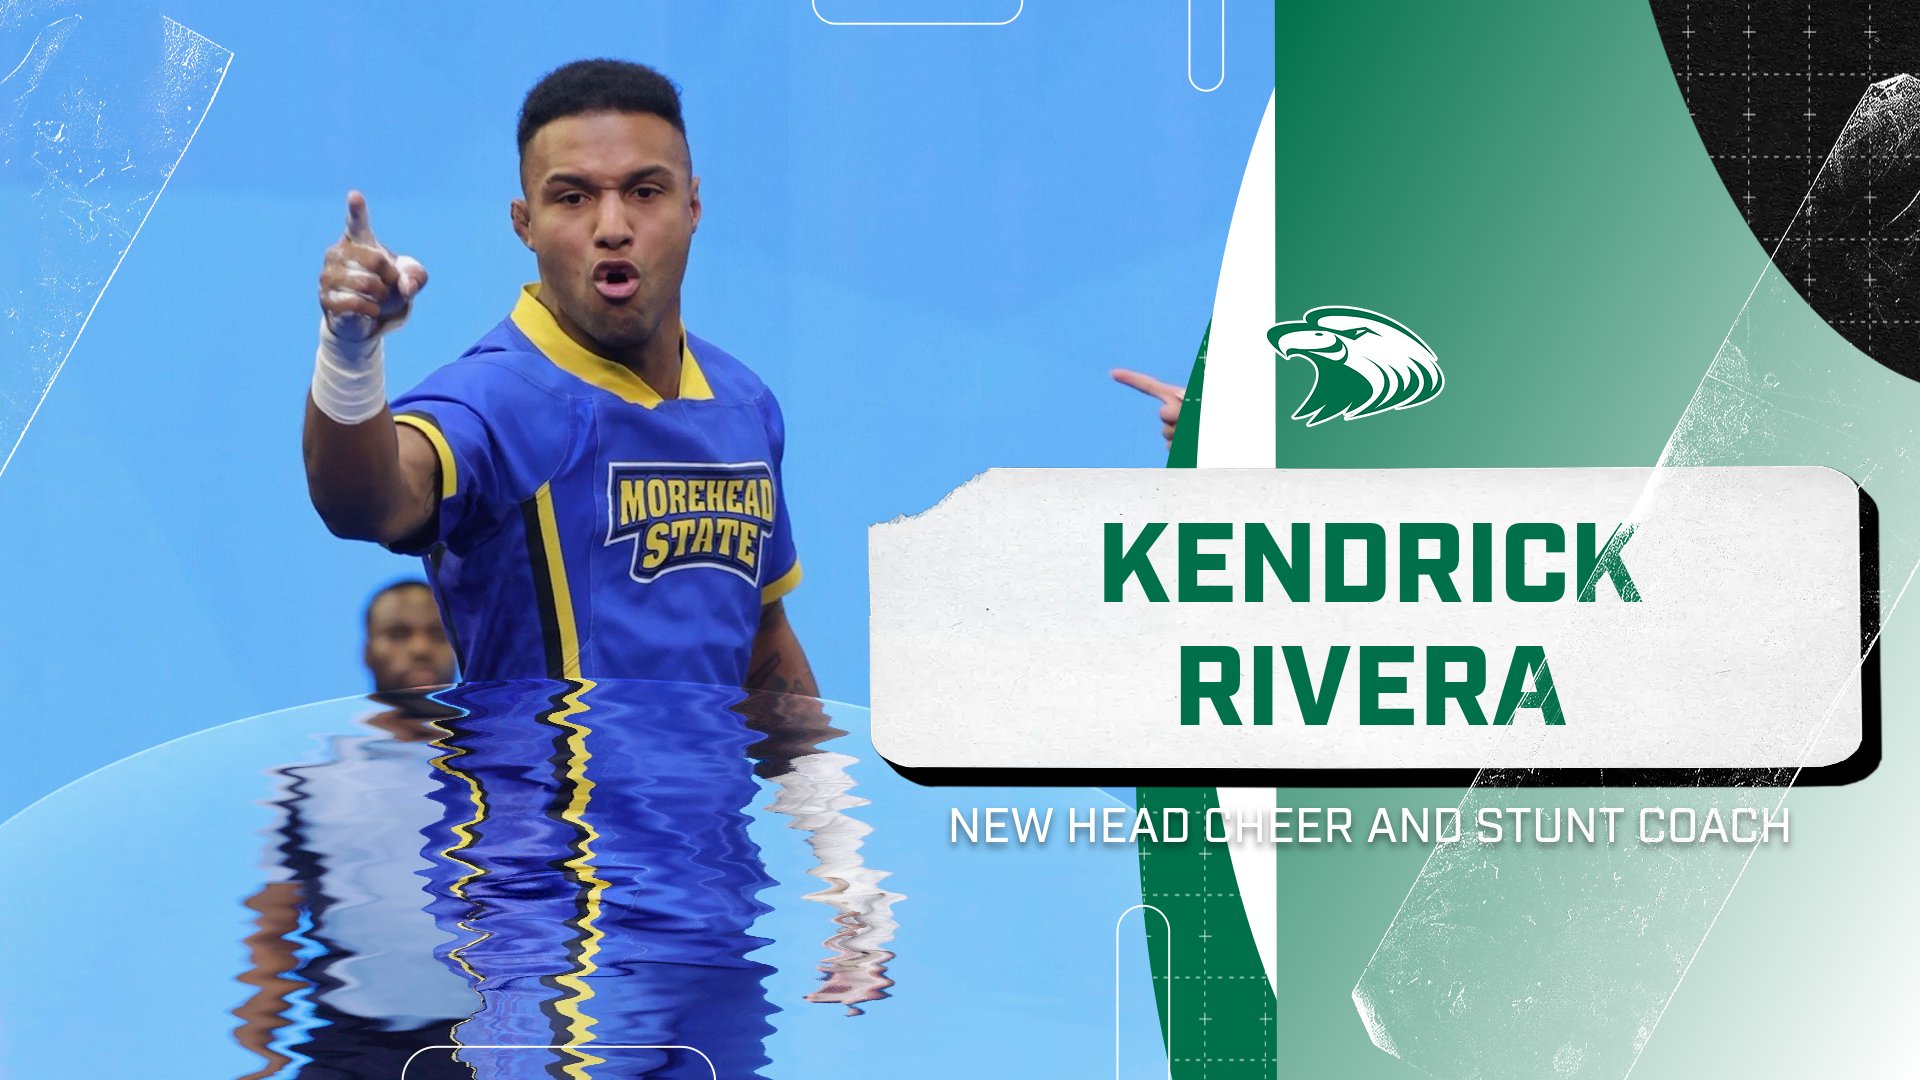 Kendrick Rivera Named New Head Cheer and STUNT Coach